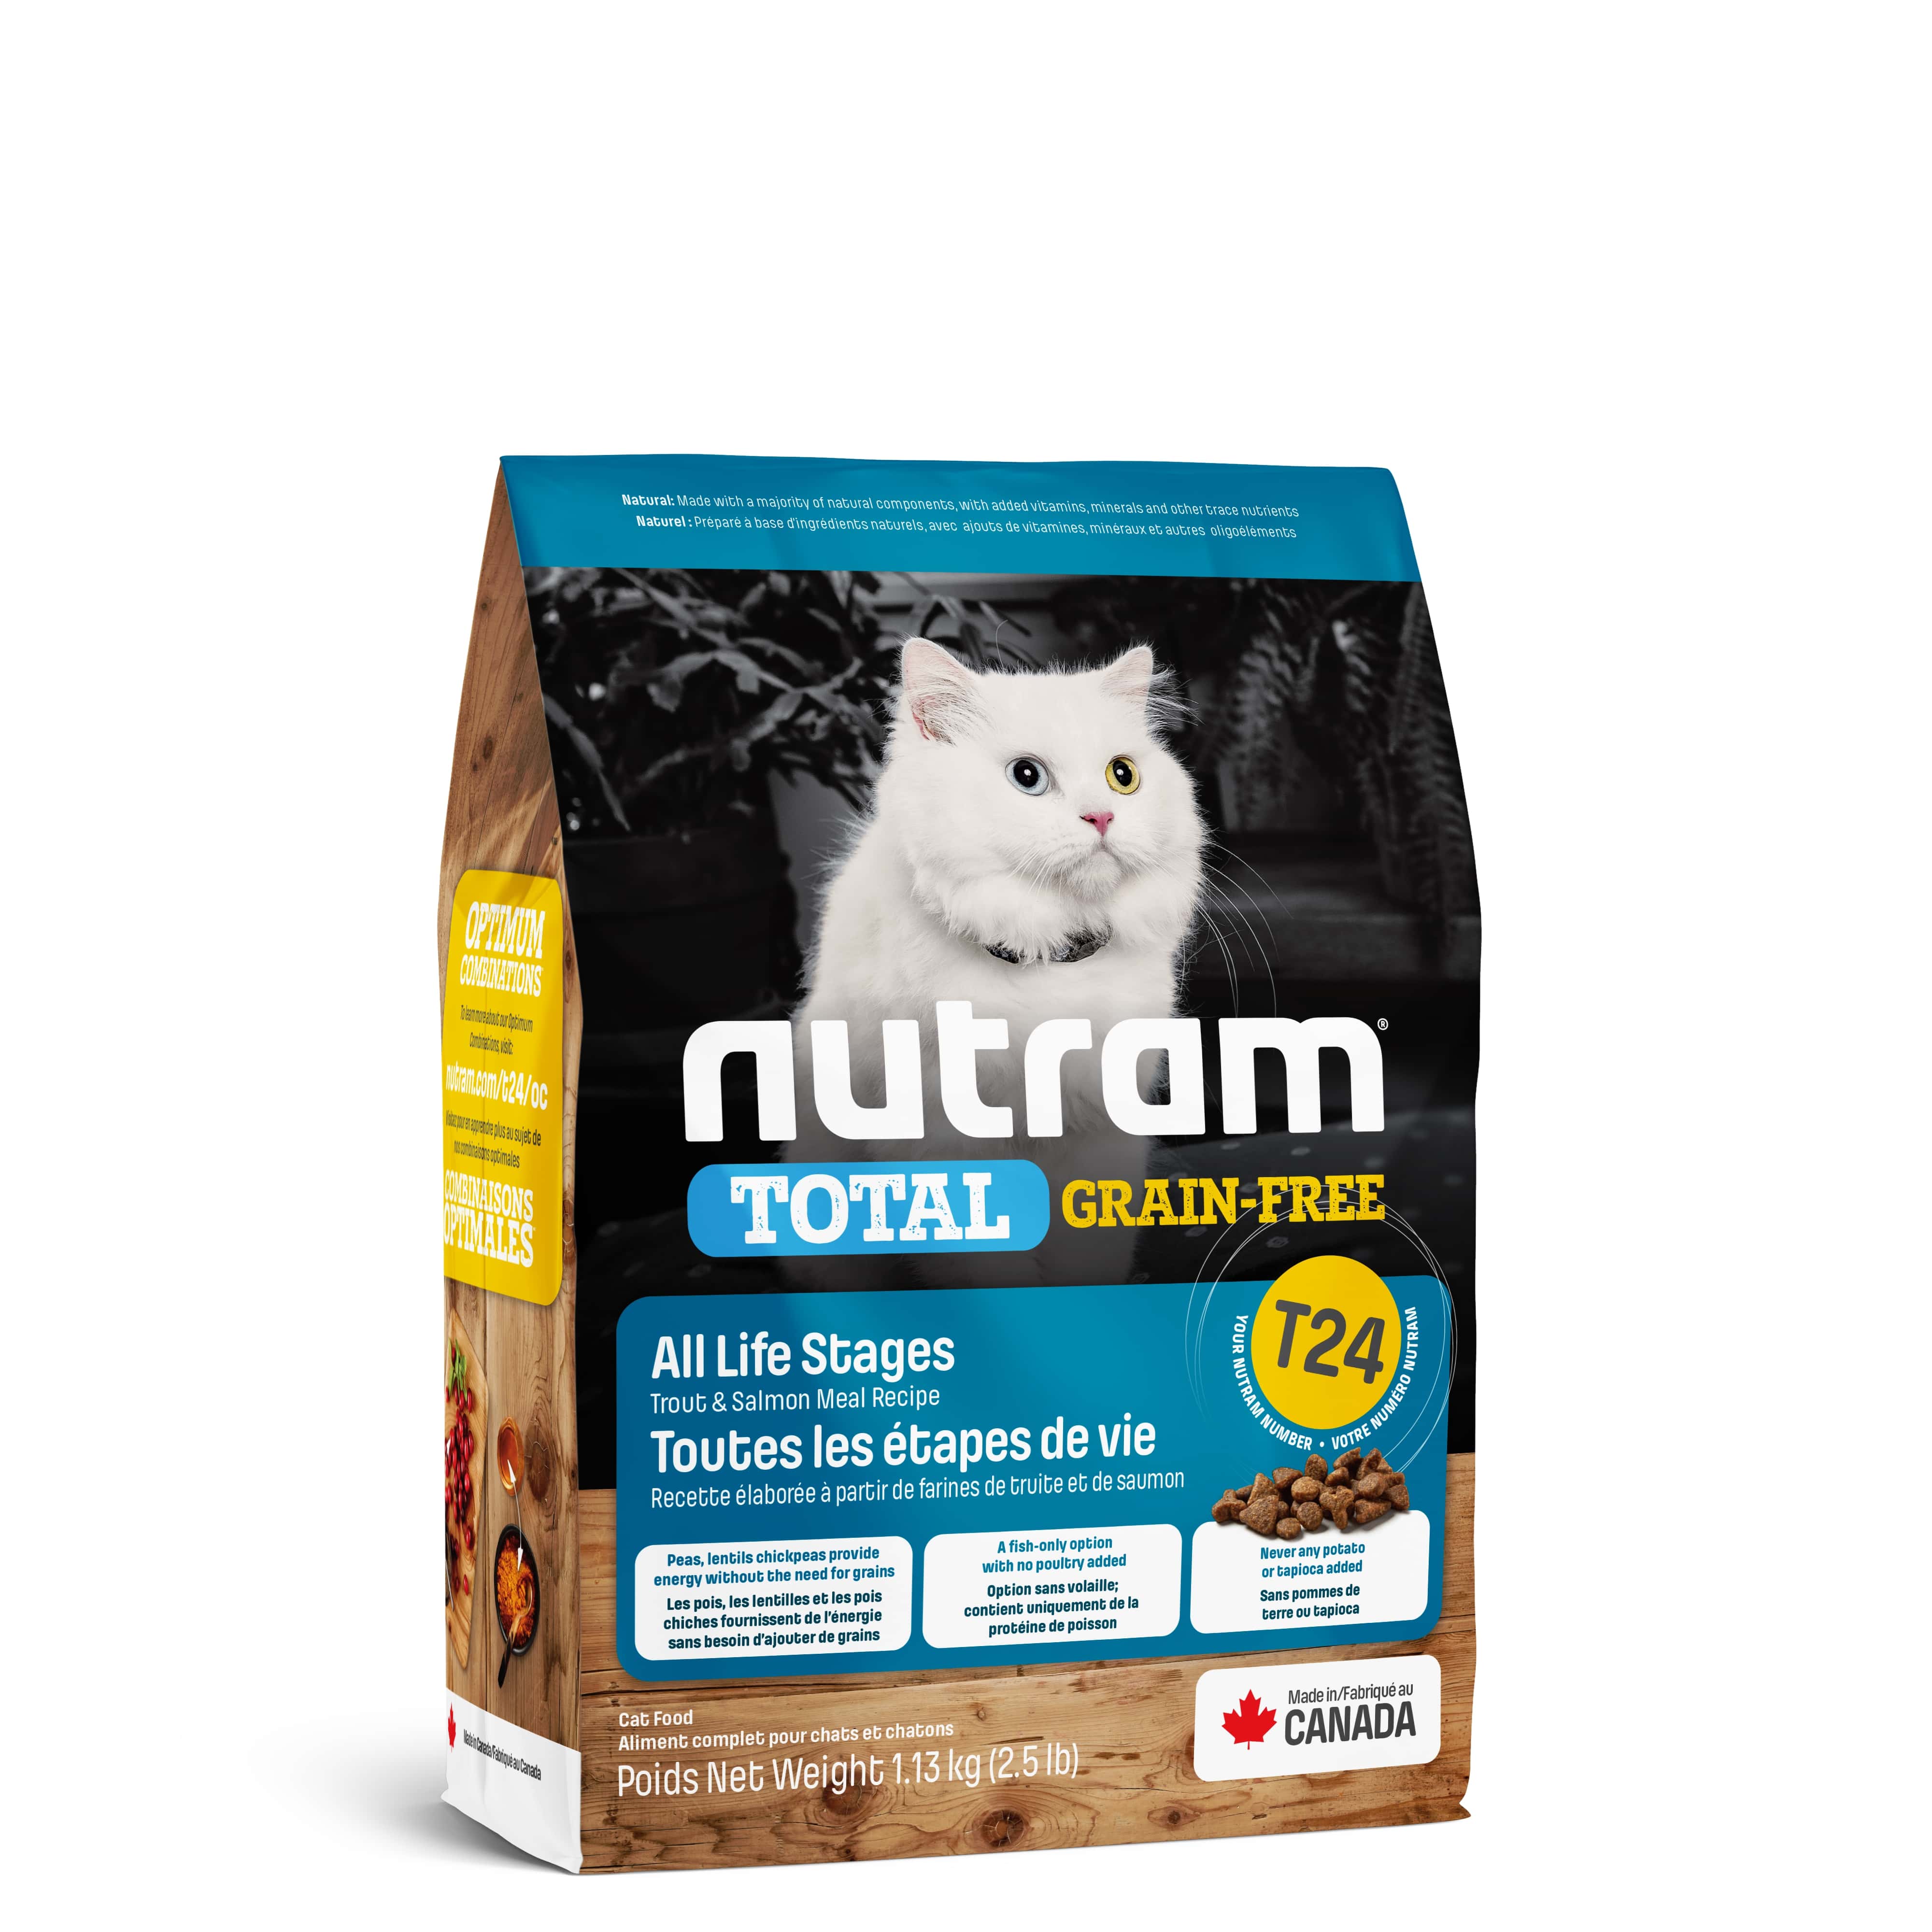 T24 Nutram Total Grain-Free® Salmon & Trout Cat Food